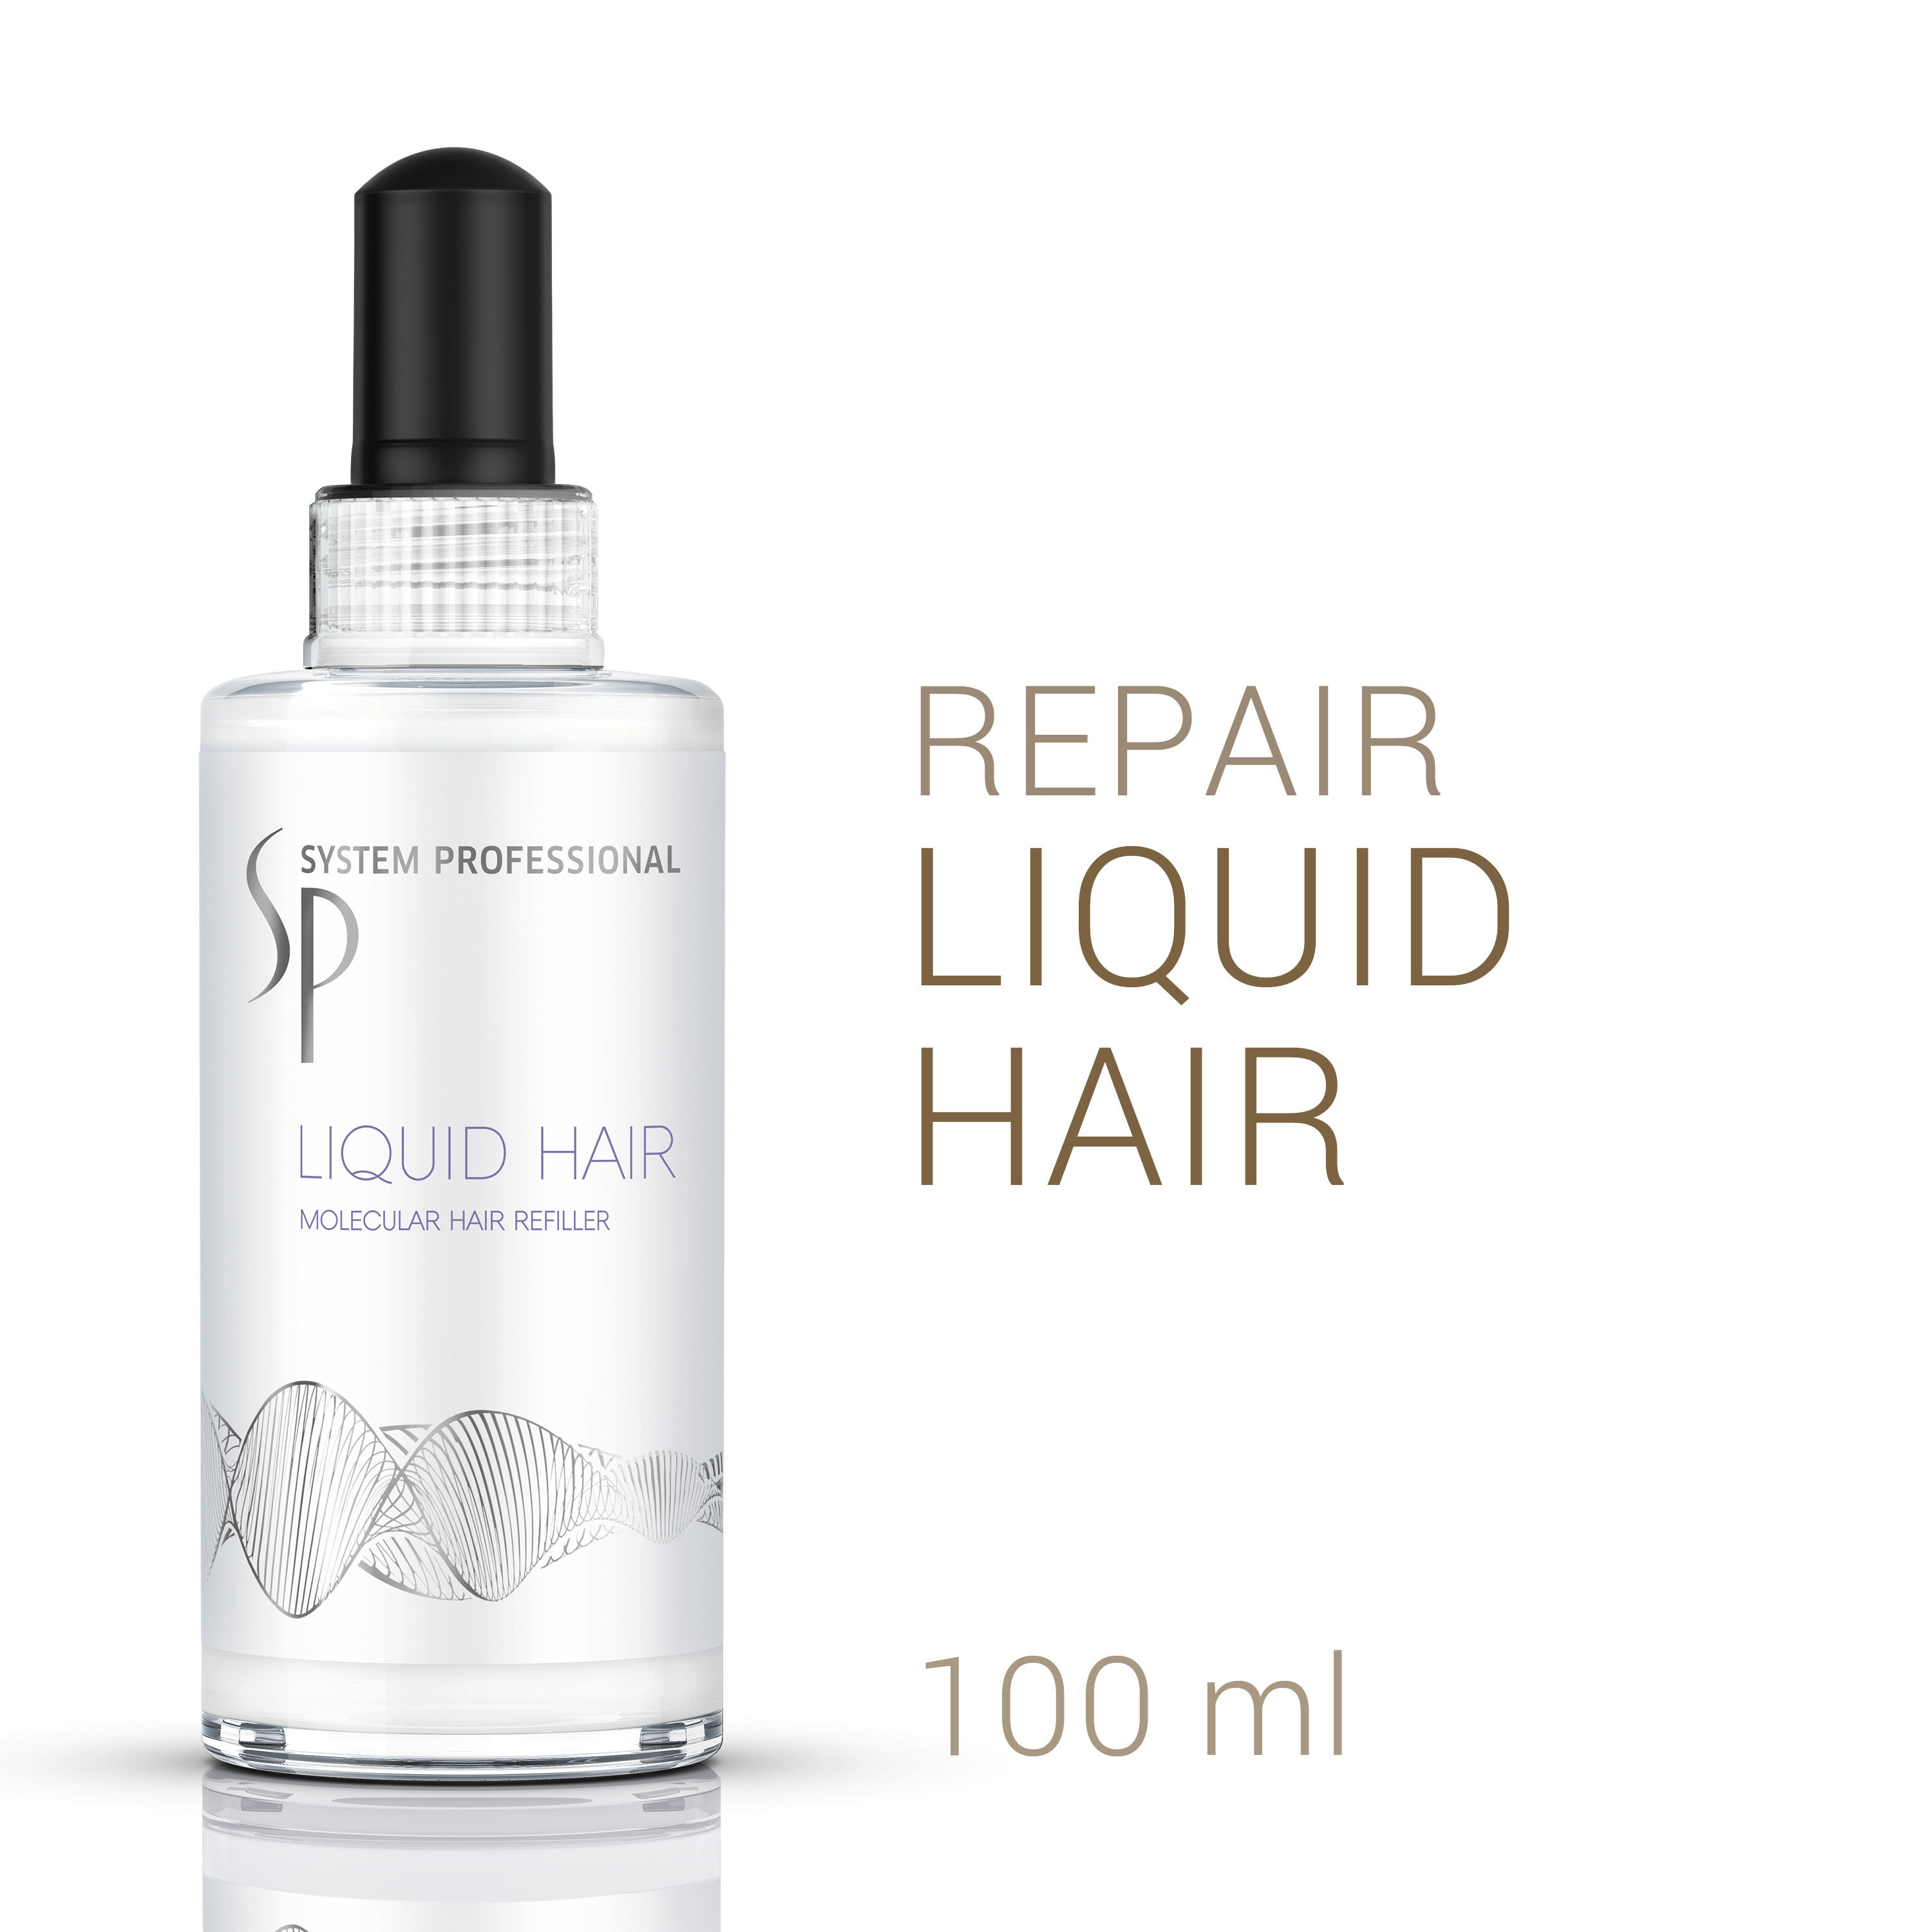 SP Liquid Molecular Hair Refiller